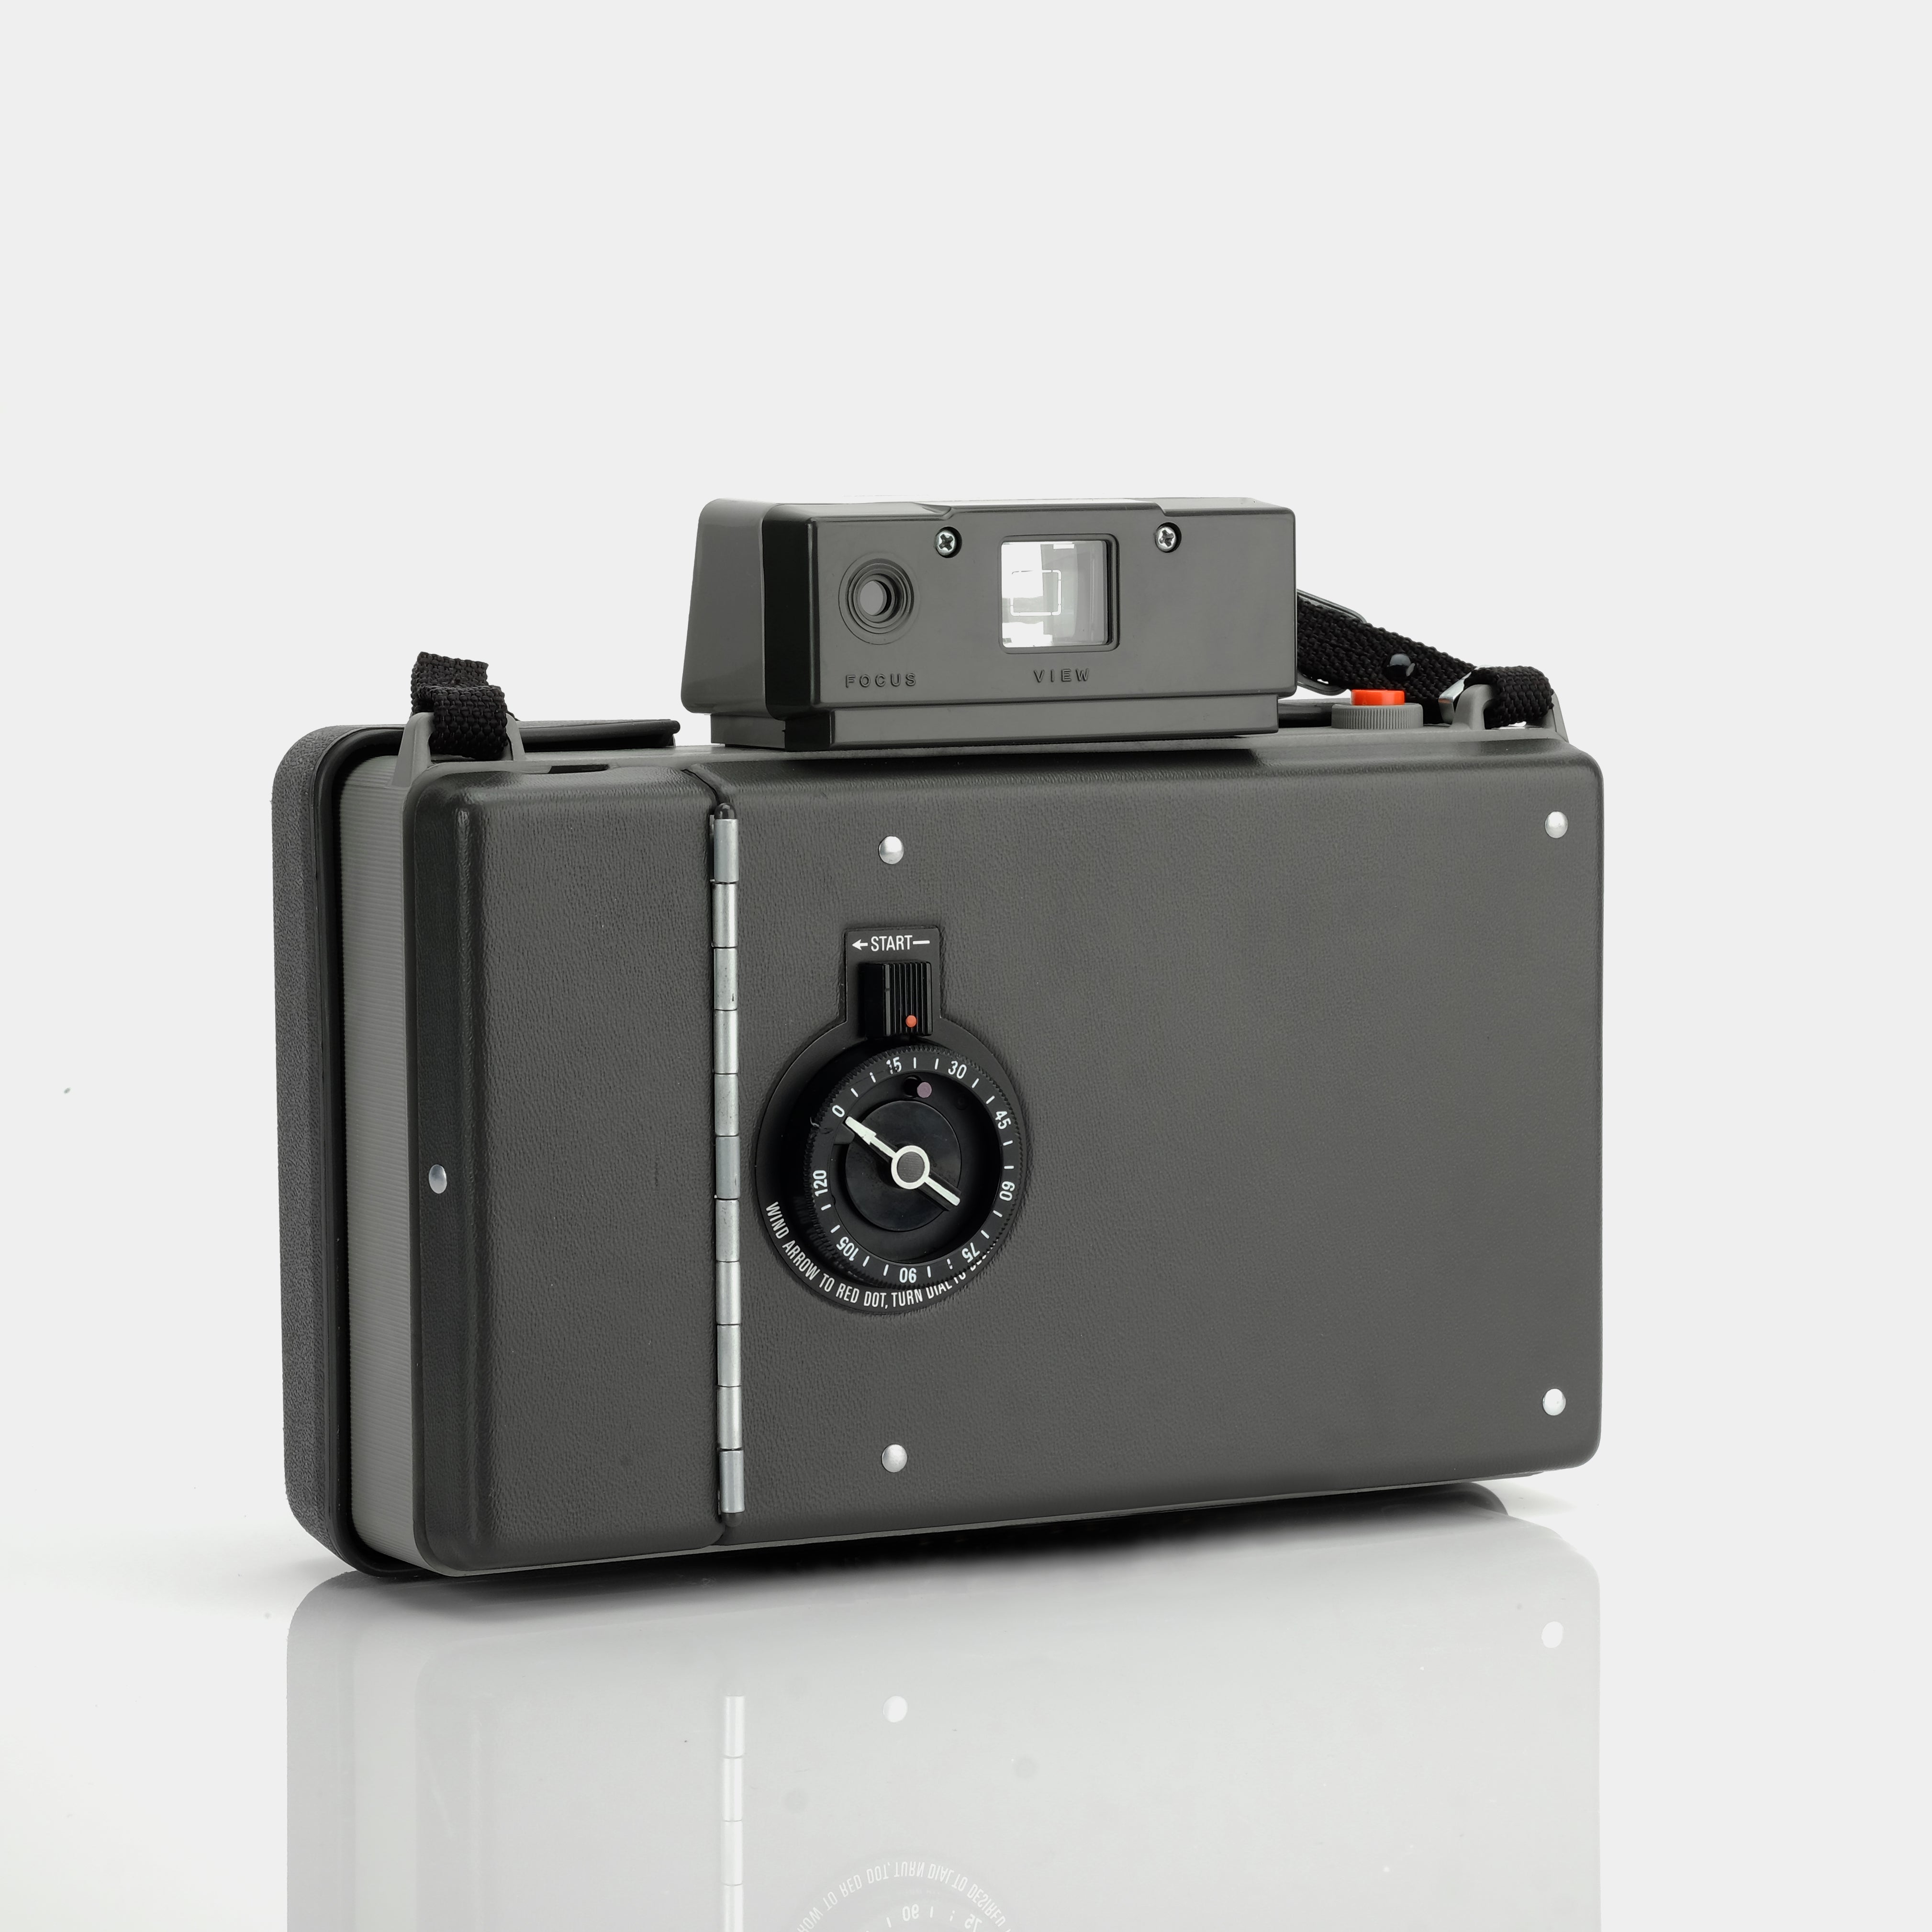 Polaroid Model 330 Packfilm Land Camera